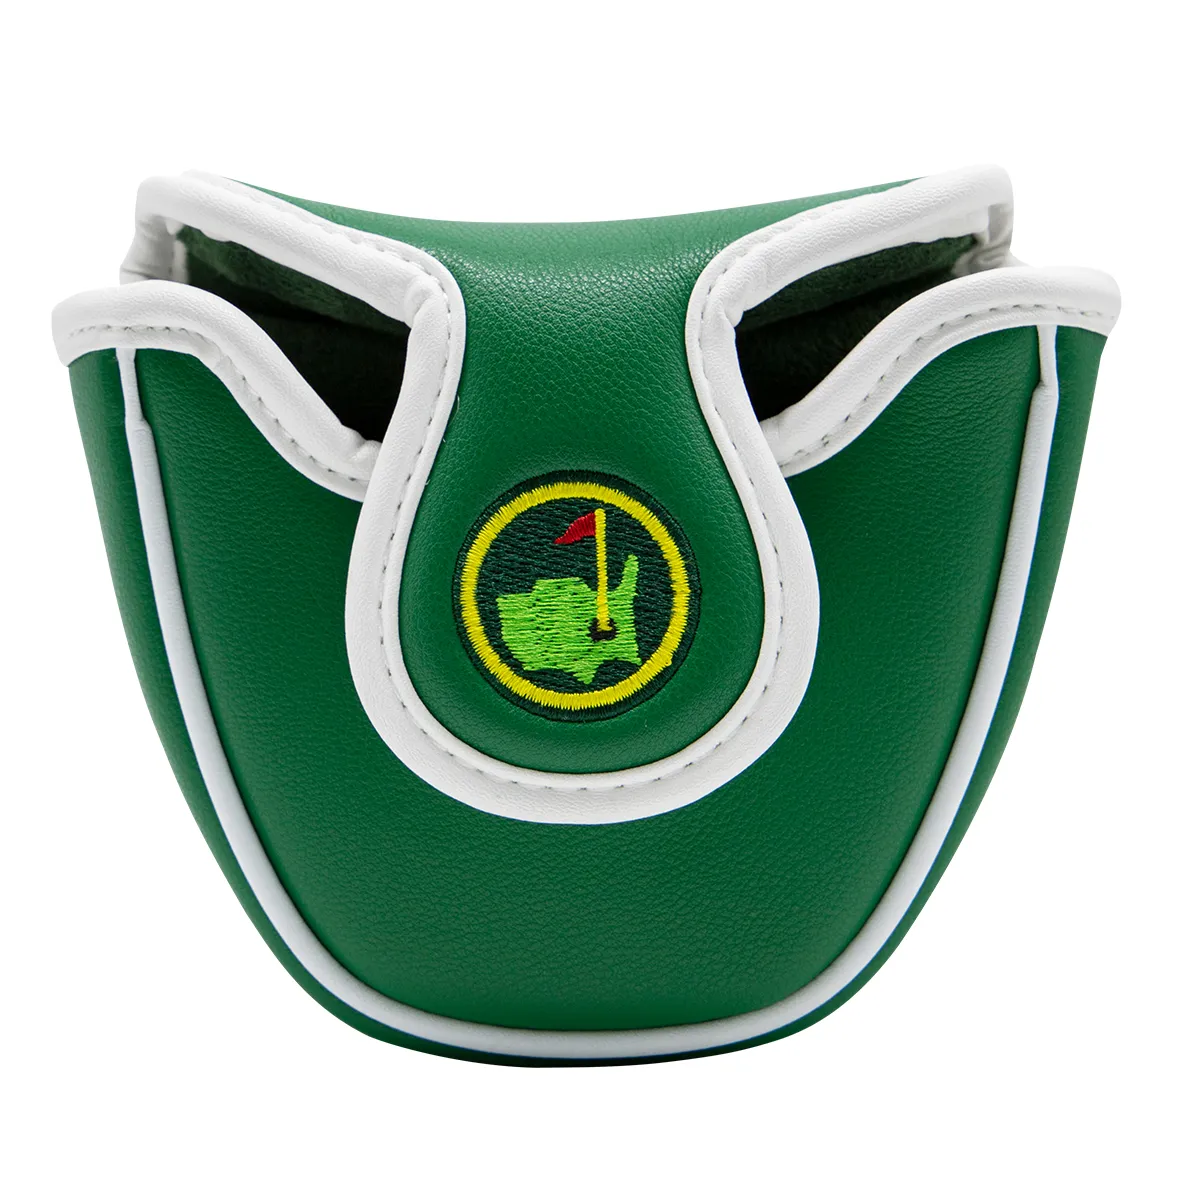 Cubierta de Putter de chaqueta verde a prueba de manchas de agua, fundas de cabeza para Club de Golf, mazo de cuero PU, accesorios magnéticos 4269001